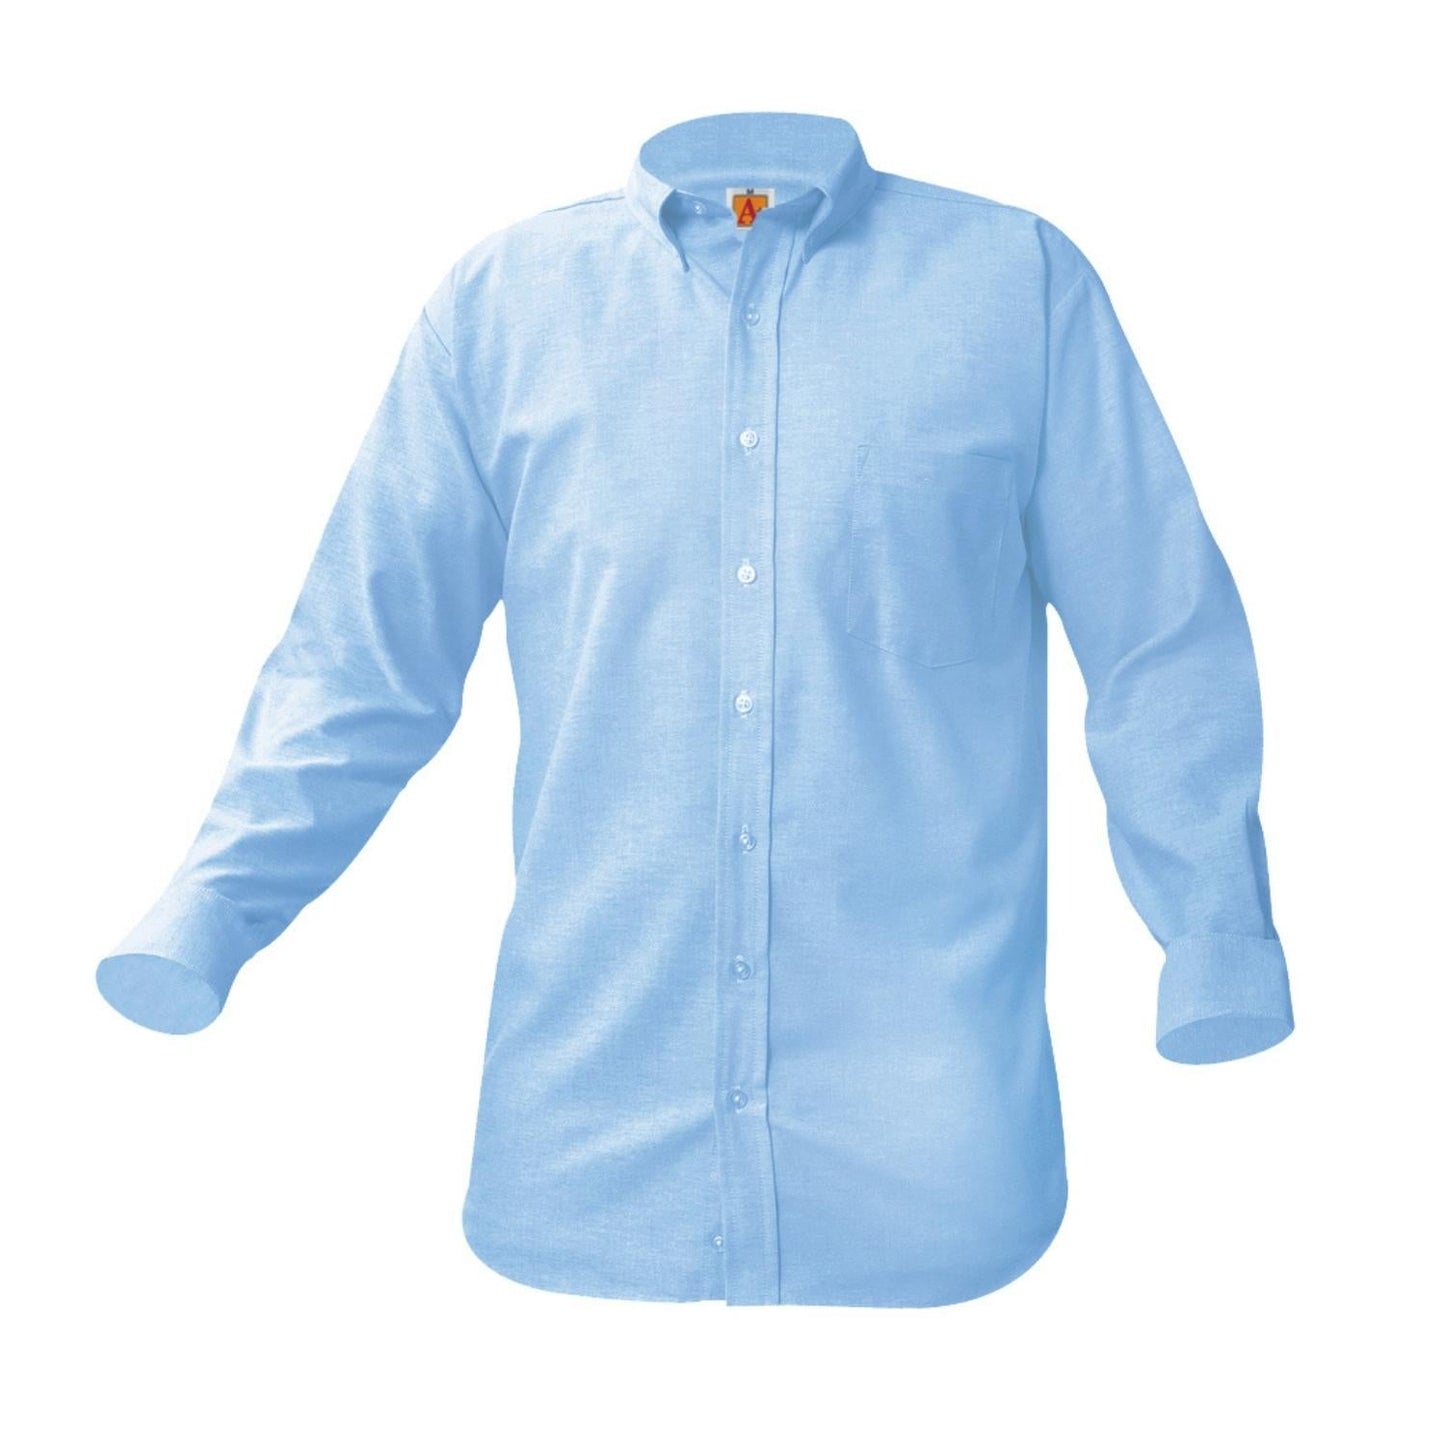 Oxford Long Sleeve Shirt (Male) w/Logo - 1109